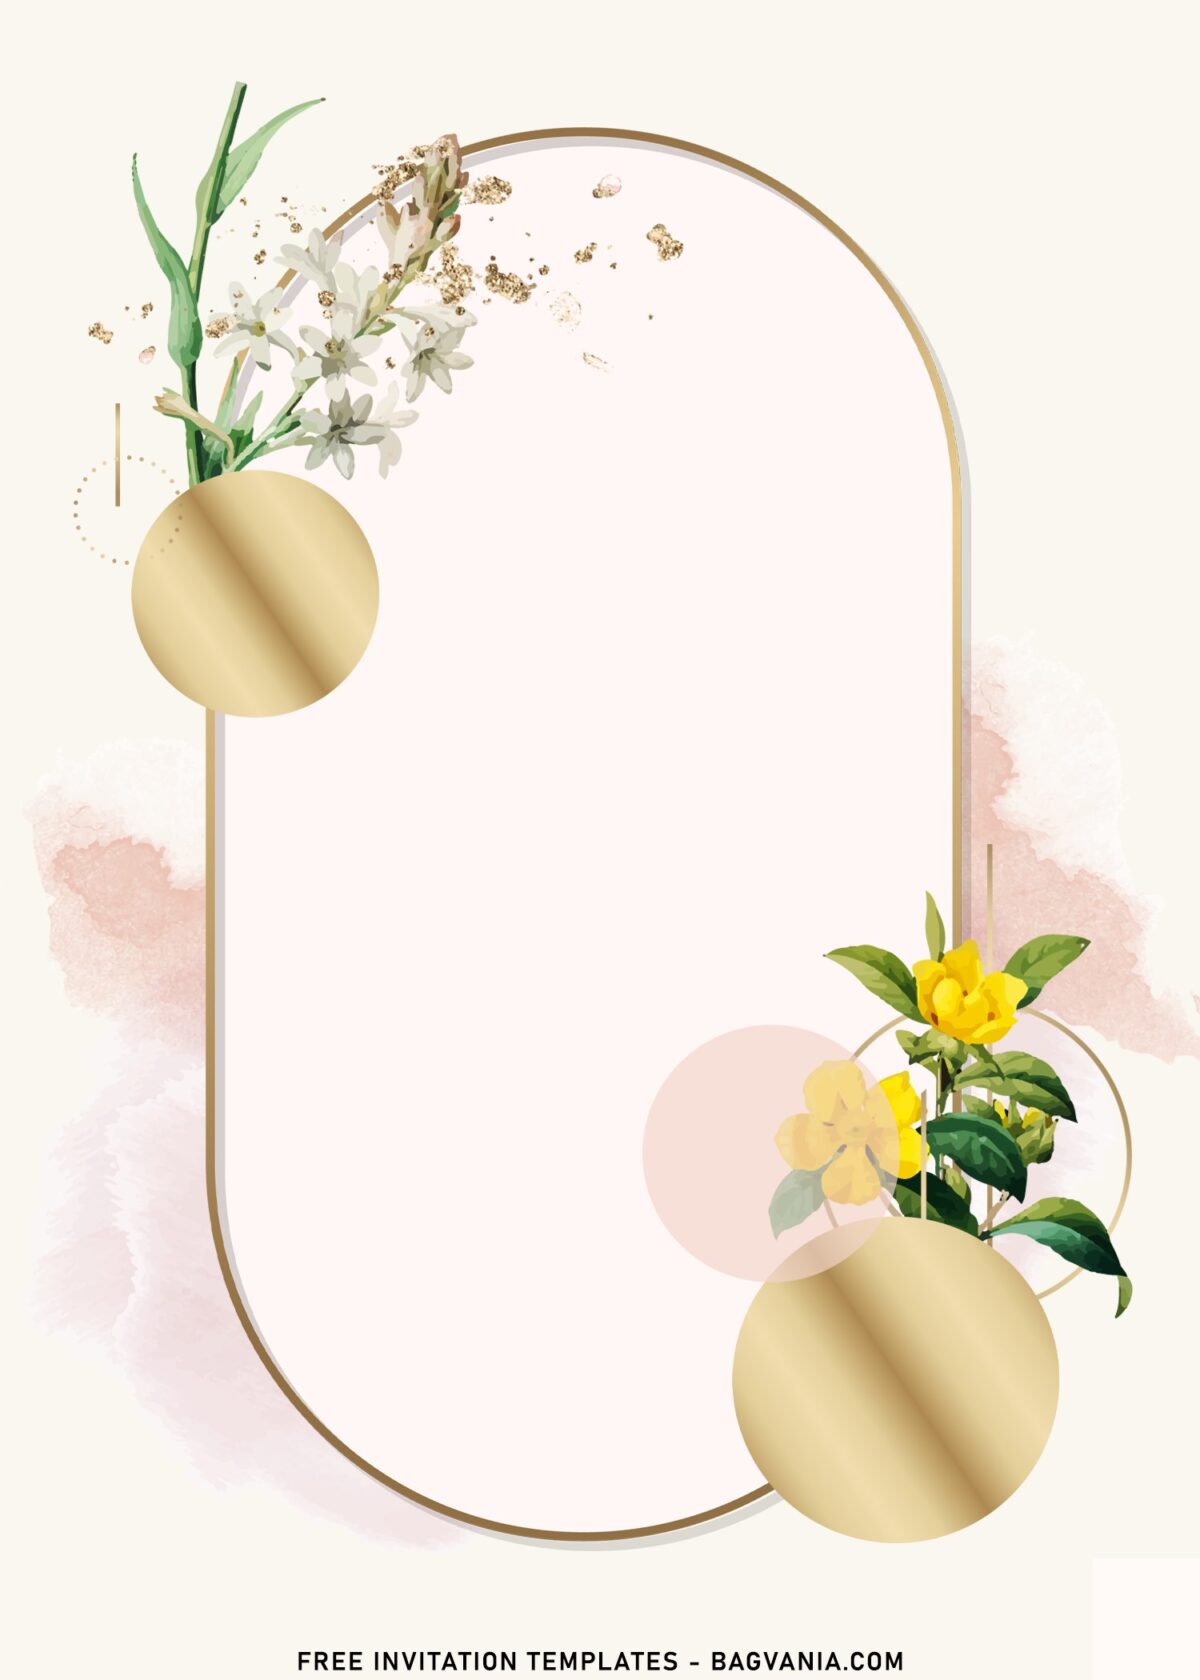 9+ Classically Elegant Birthday Invitation Templates With Flower Charm with sakura or cherry blossom